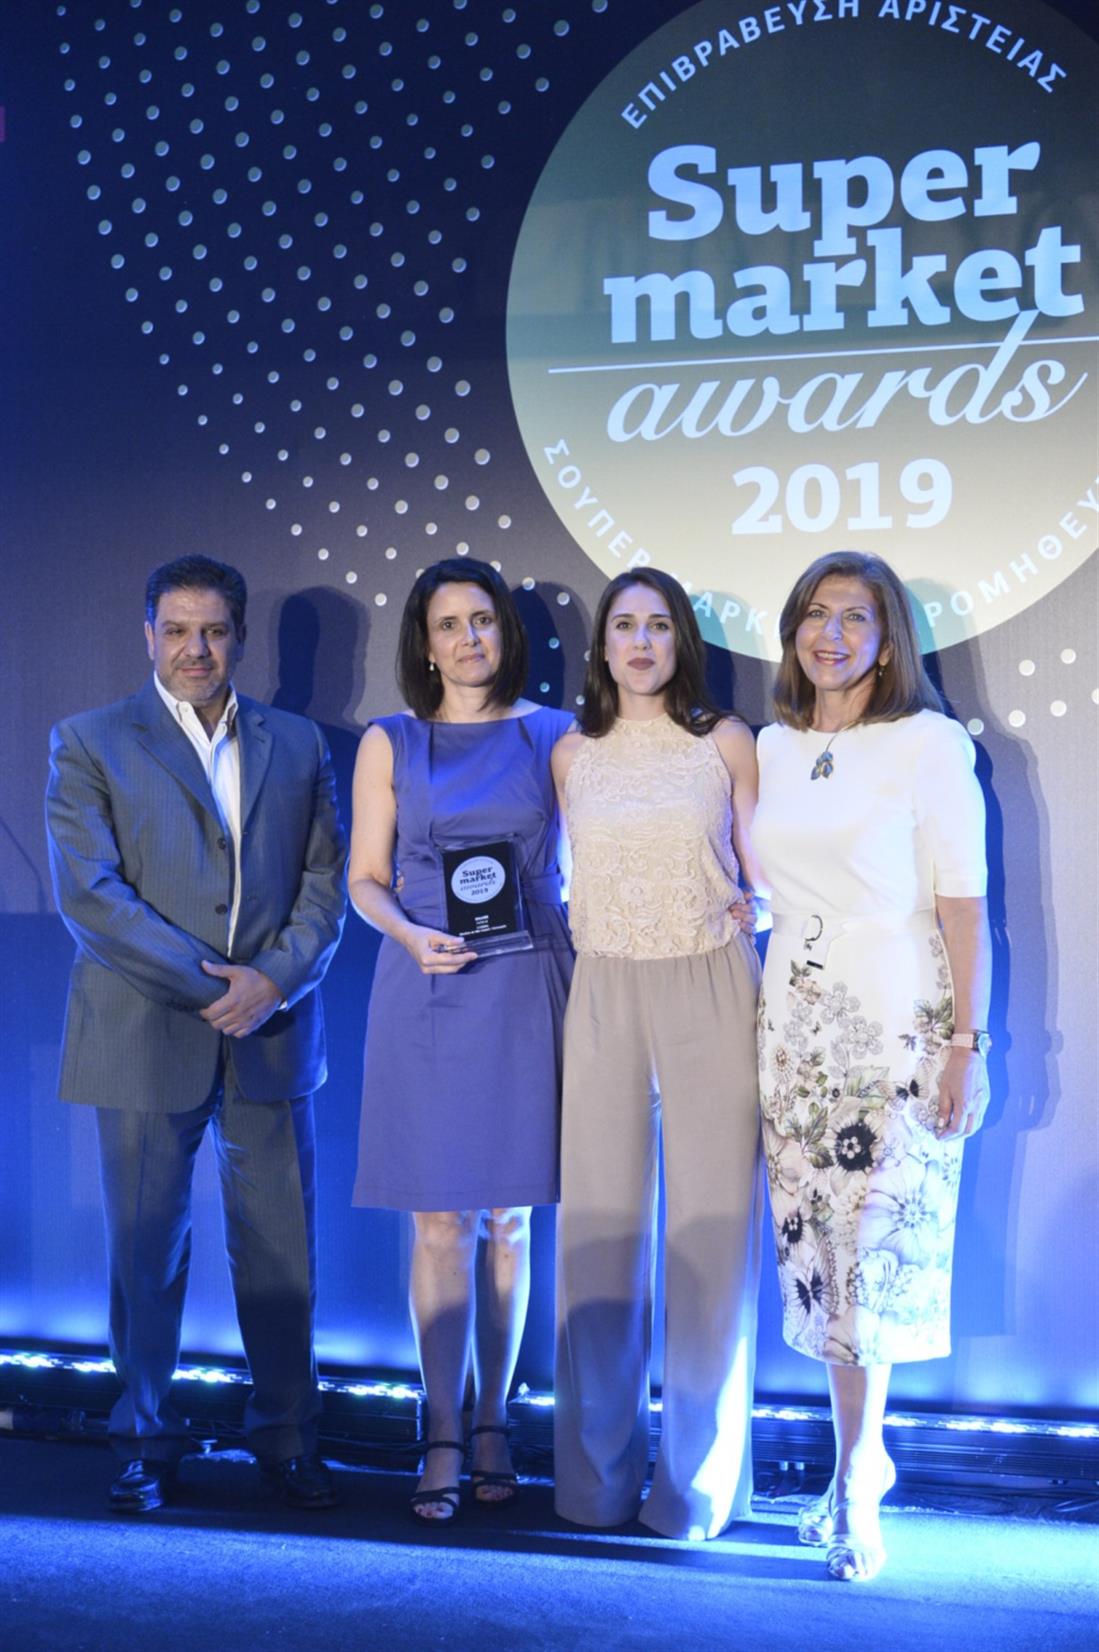 Super market awards 2019 - ΓΙΩΤΗΣ